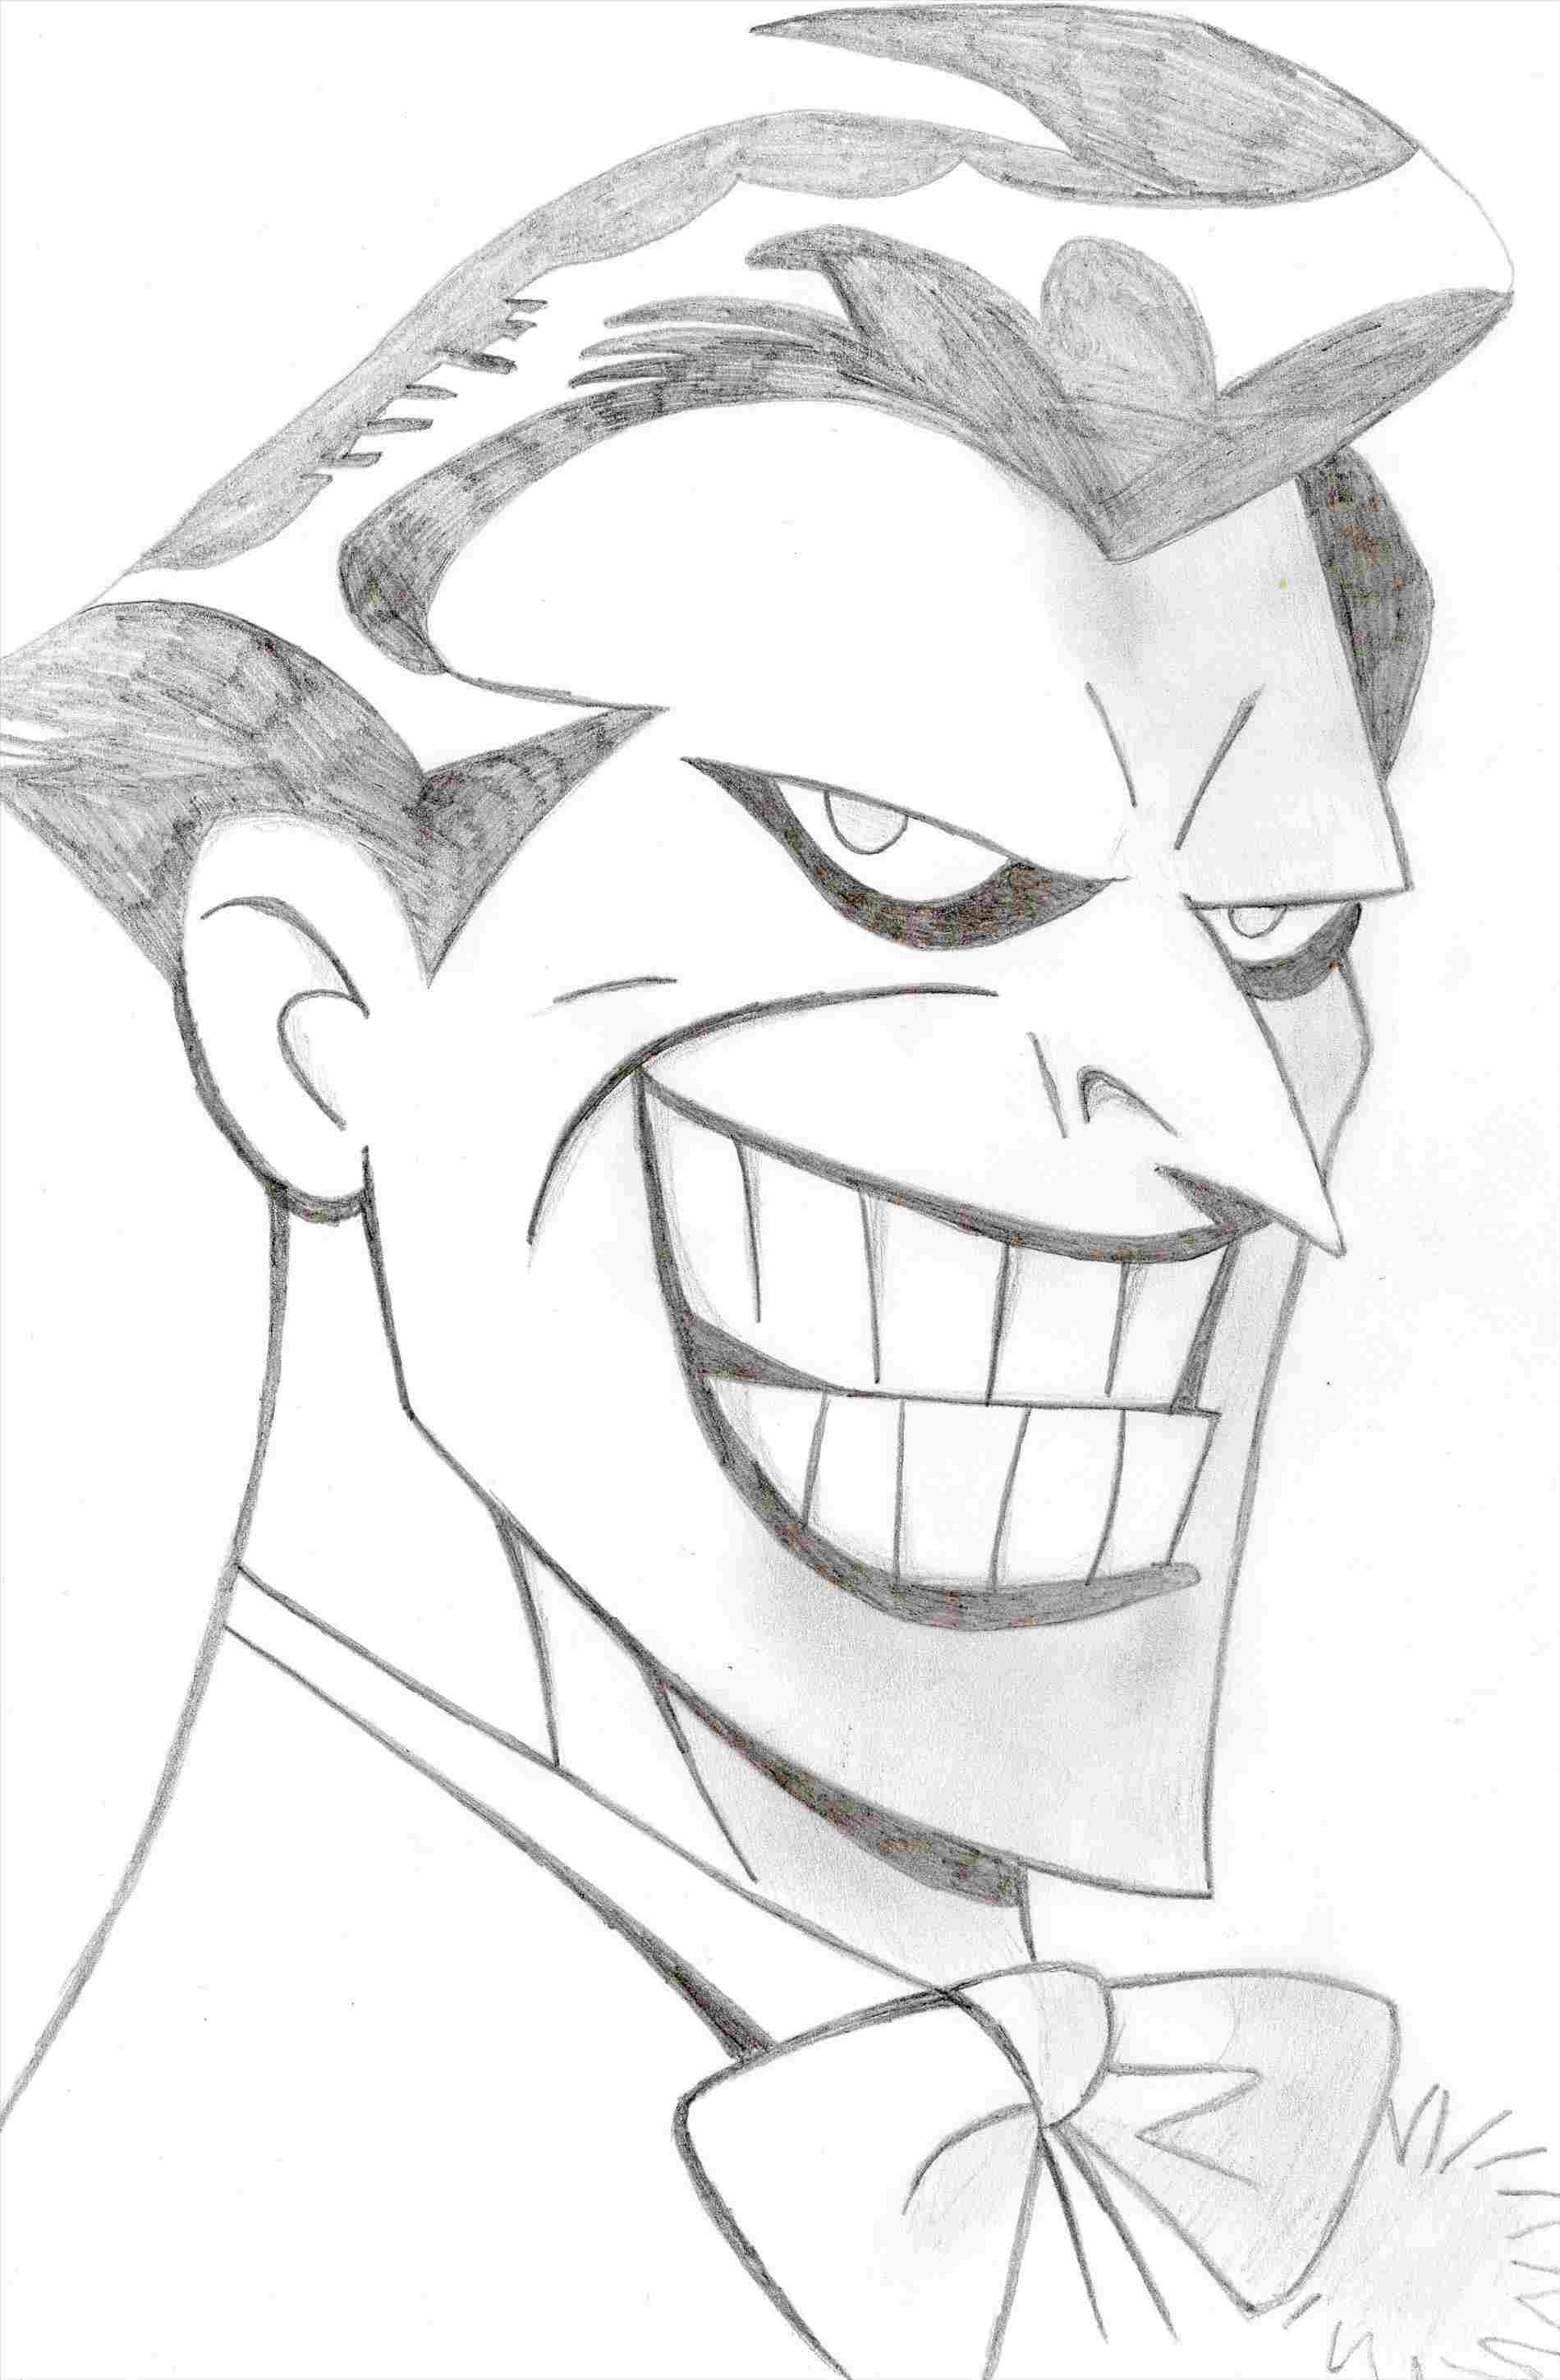 Joker Drawings at Explore collection of Joker Drawings